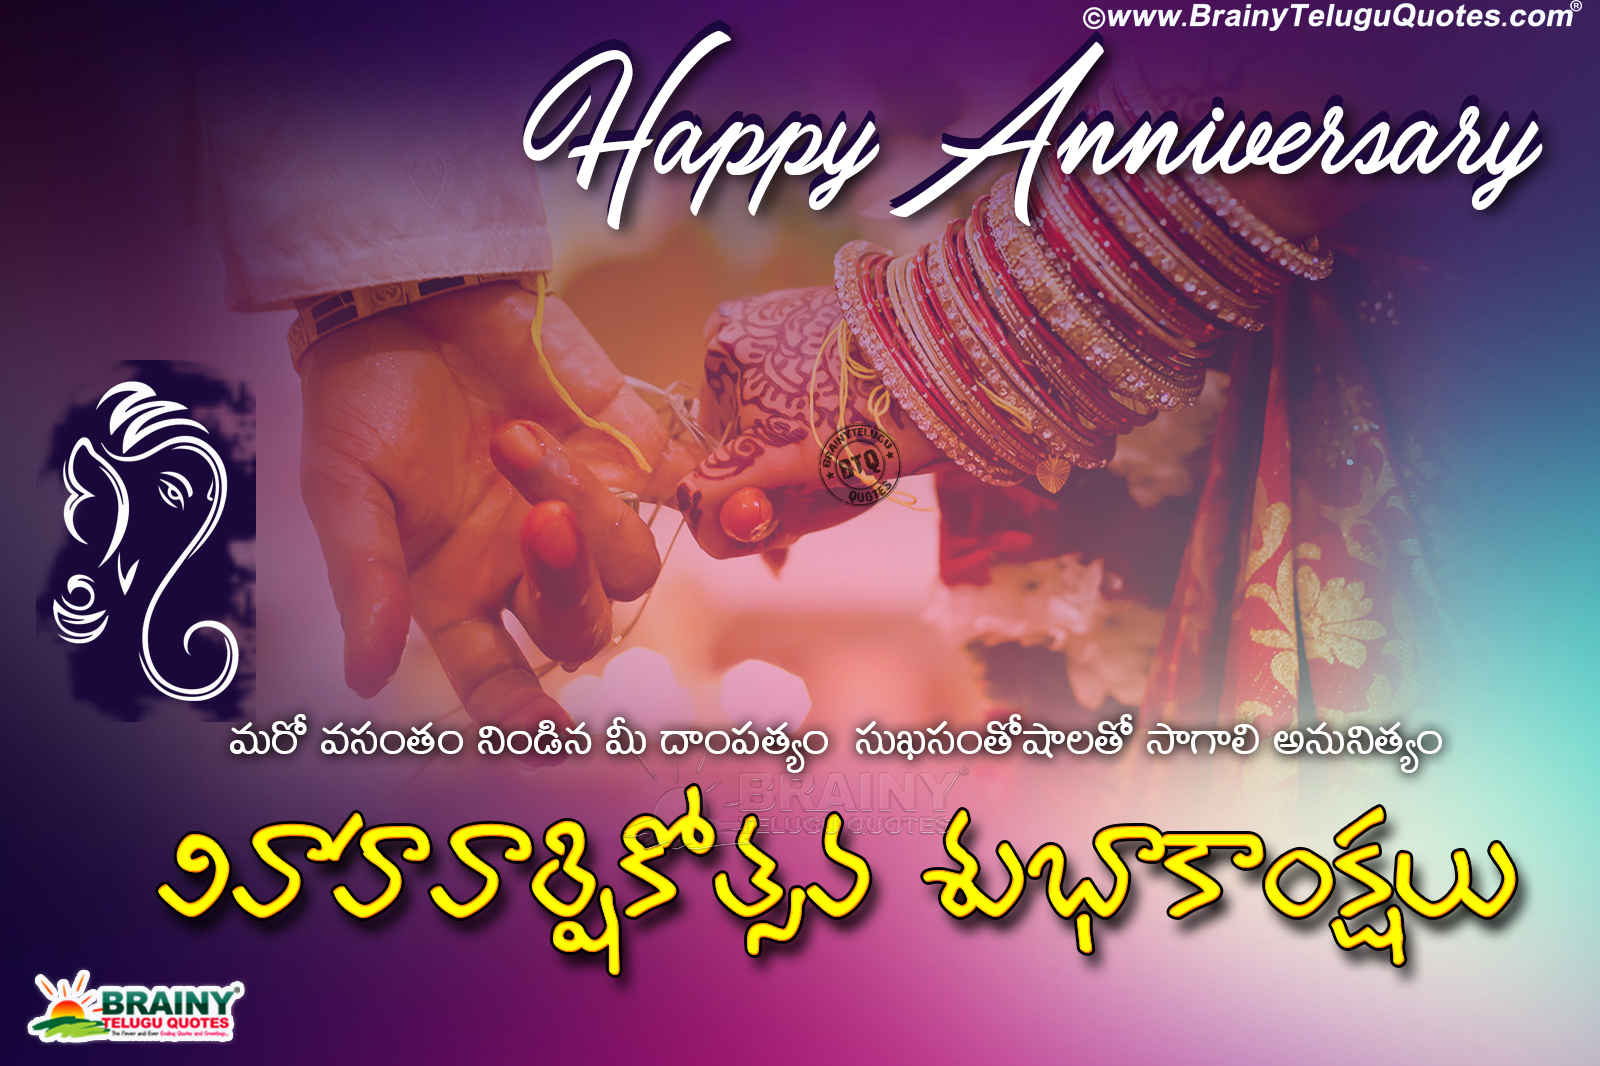 Happy Wedding Anniversary Translate In Tamil Best Design Idea